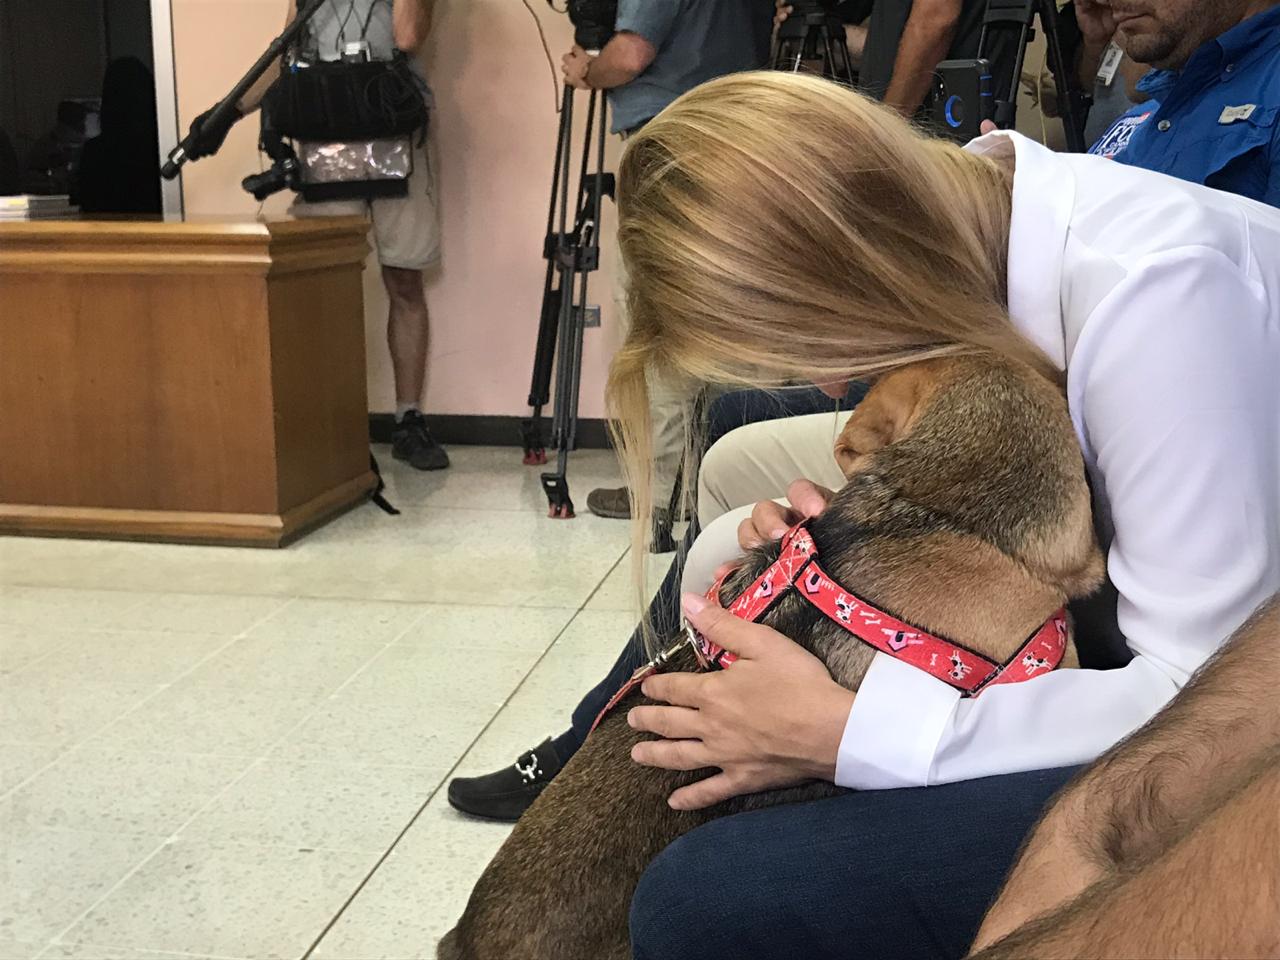 Tribunal absuelve a mujer acusada de maltrato animal